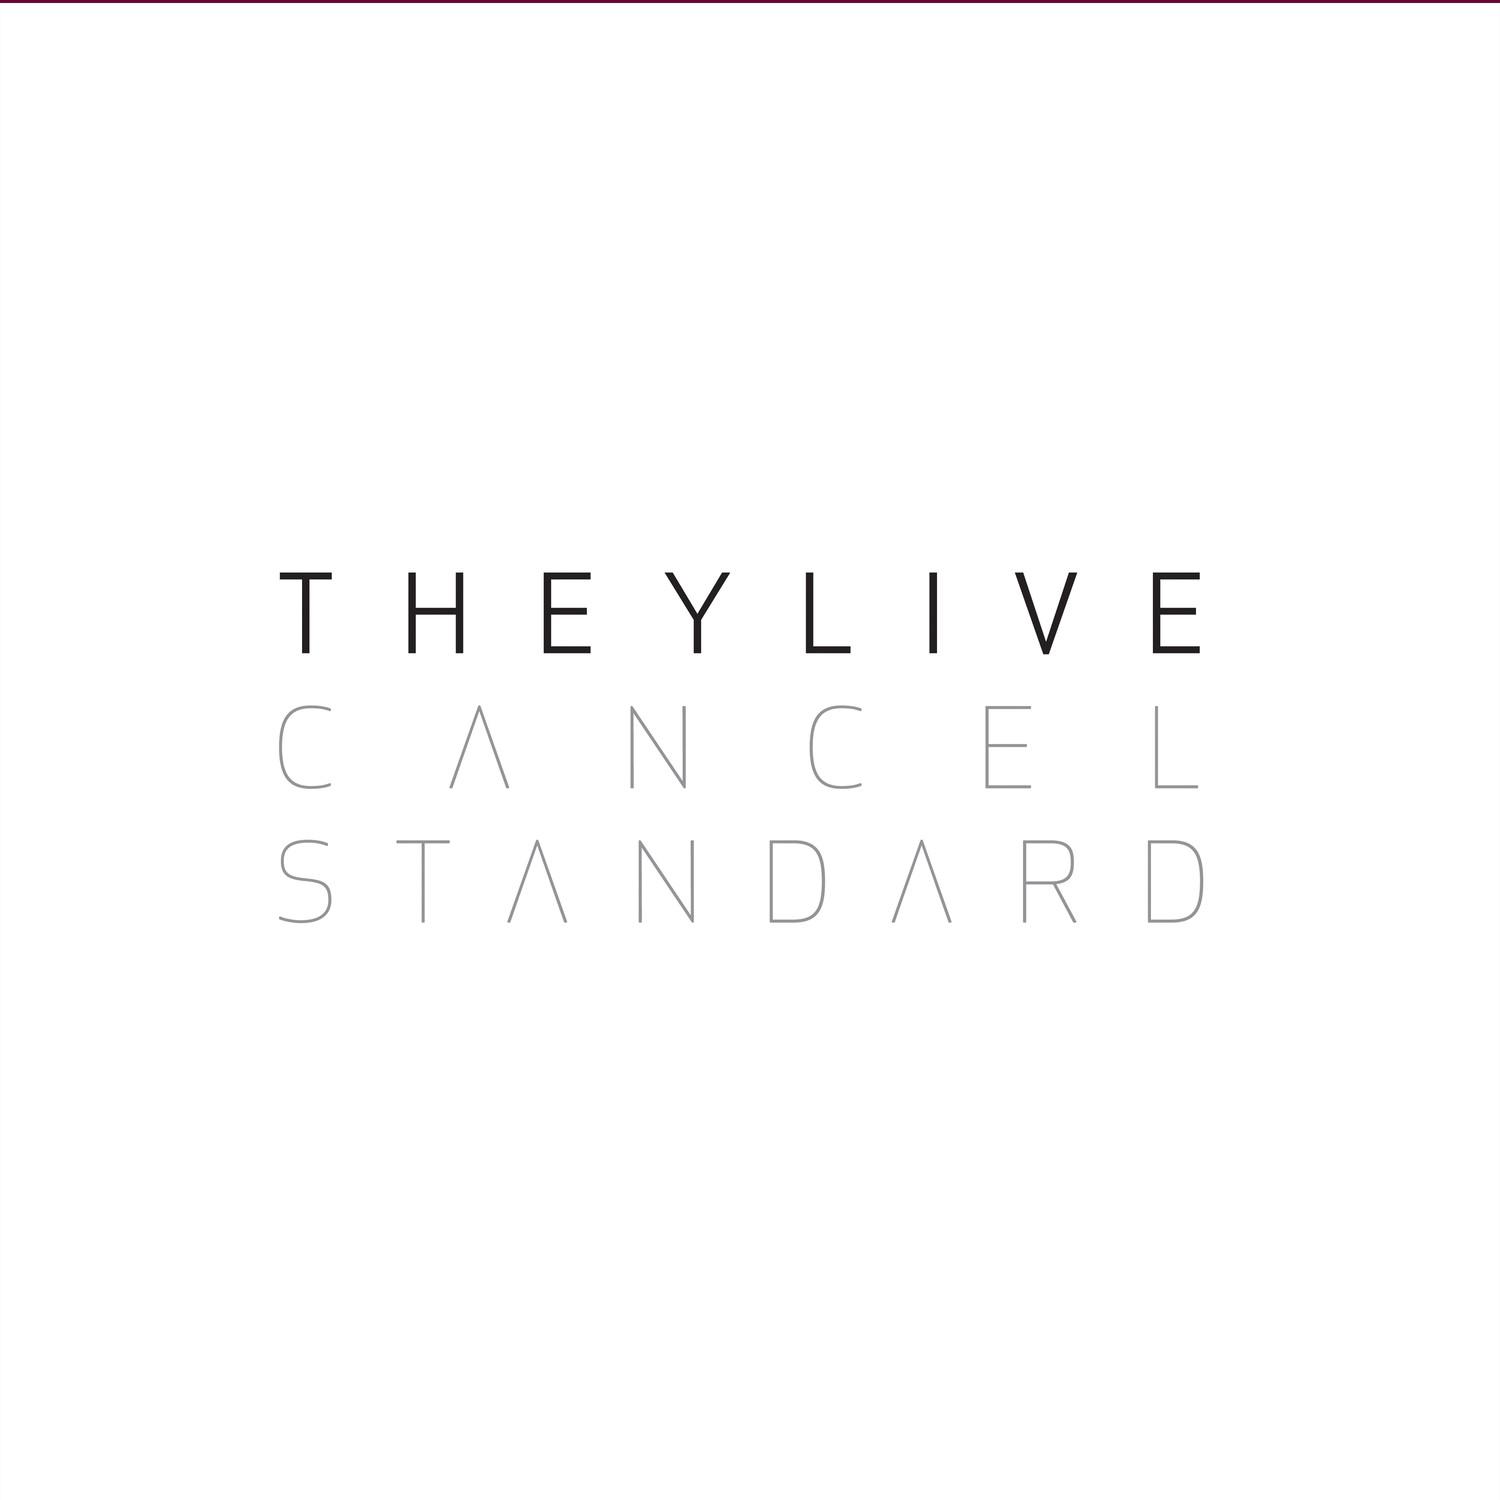 Cancel Standard